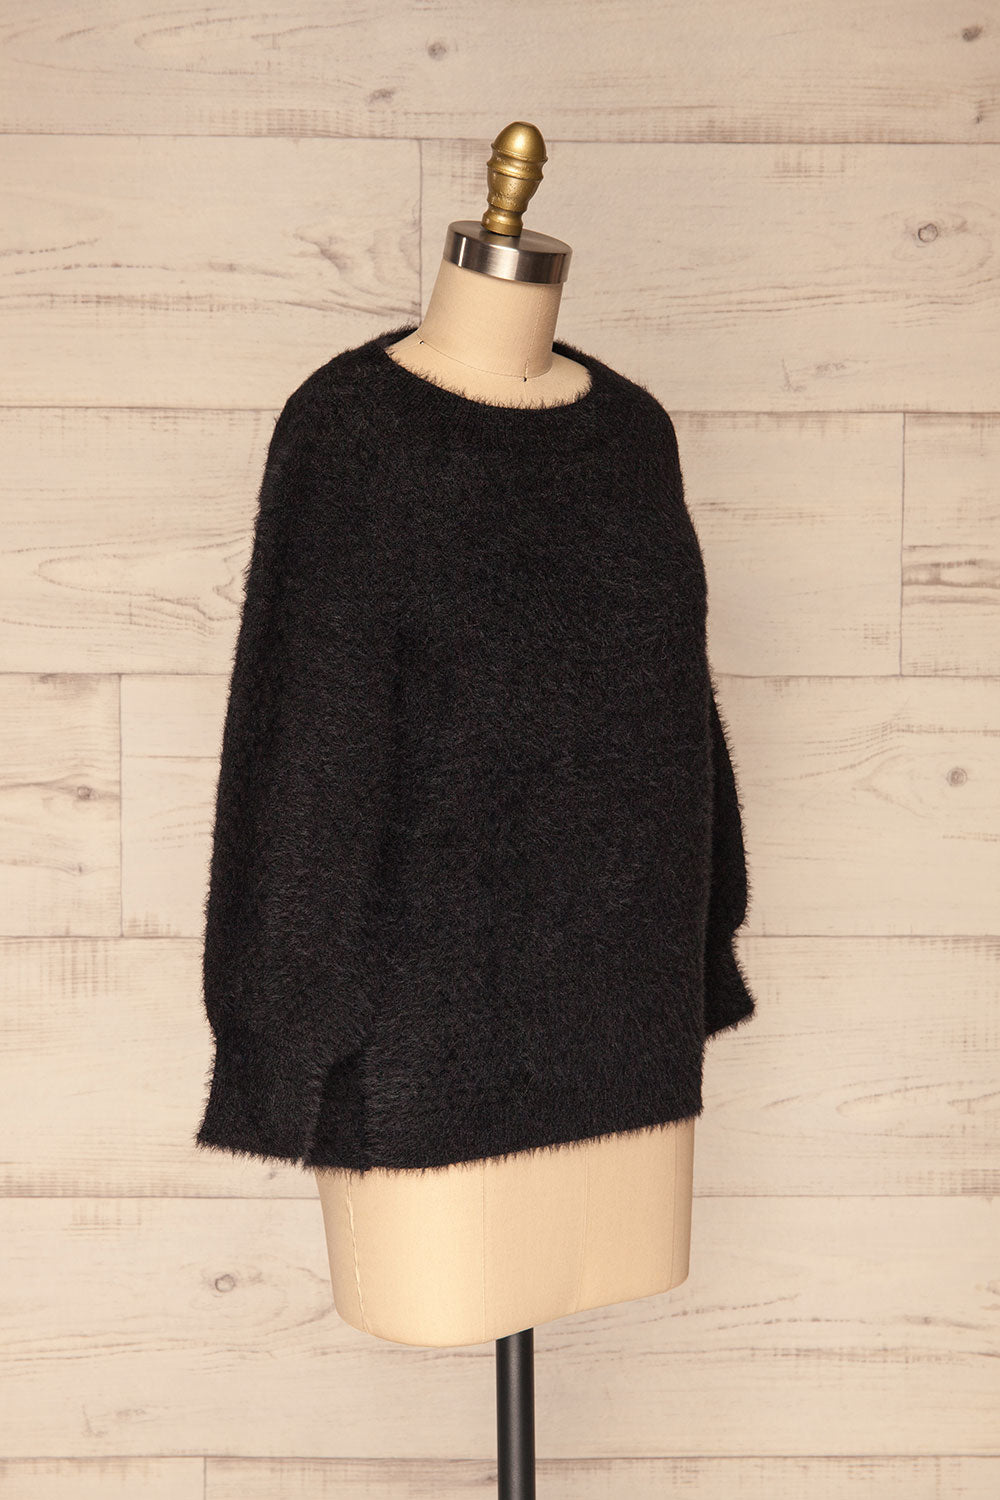 Tarsina Black Fuzzy Knit Sweater side view | La Petite Garçonne